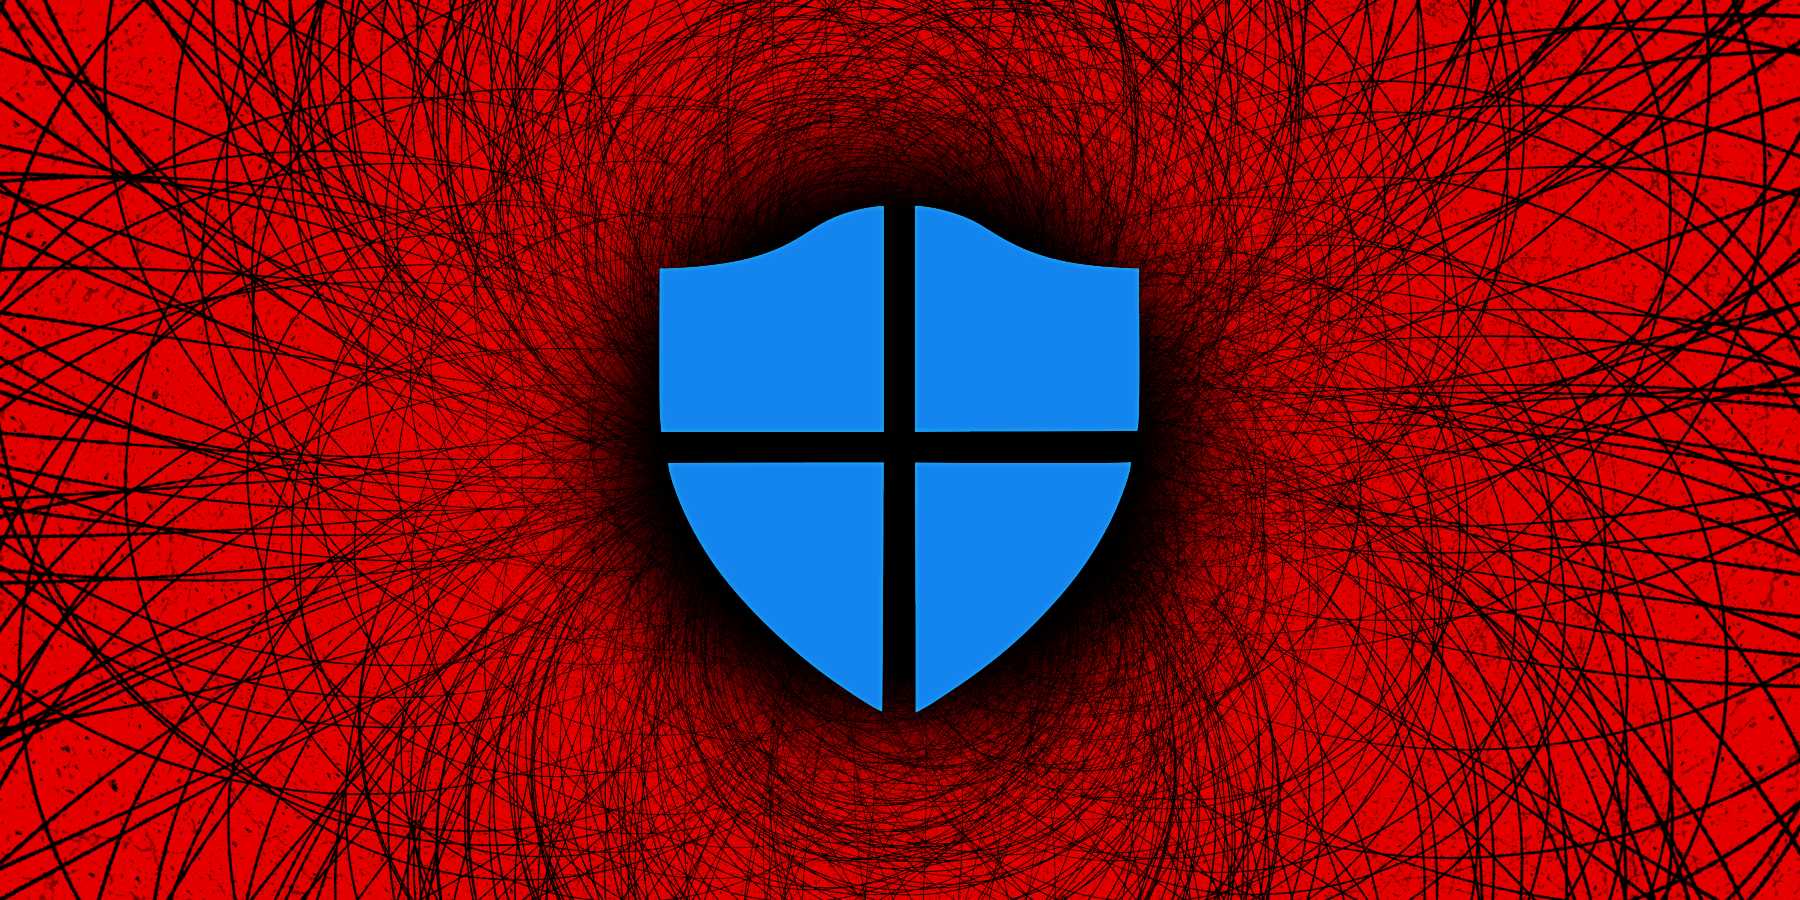 Windows SmartScreen flaw exploited to drop Phemedrone malware